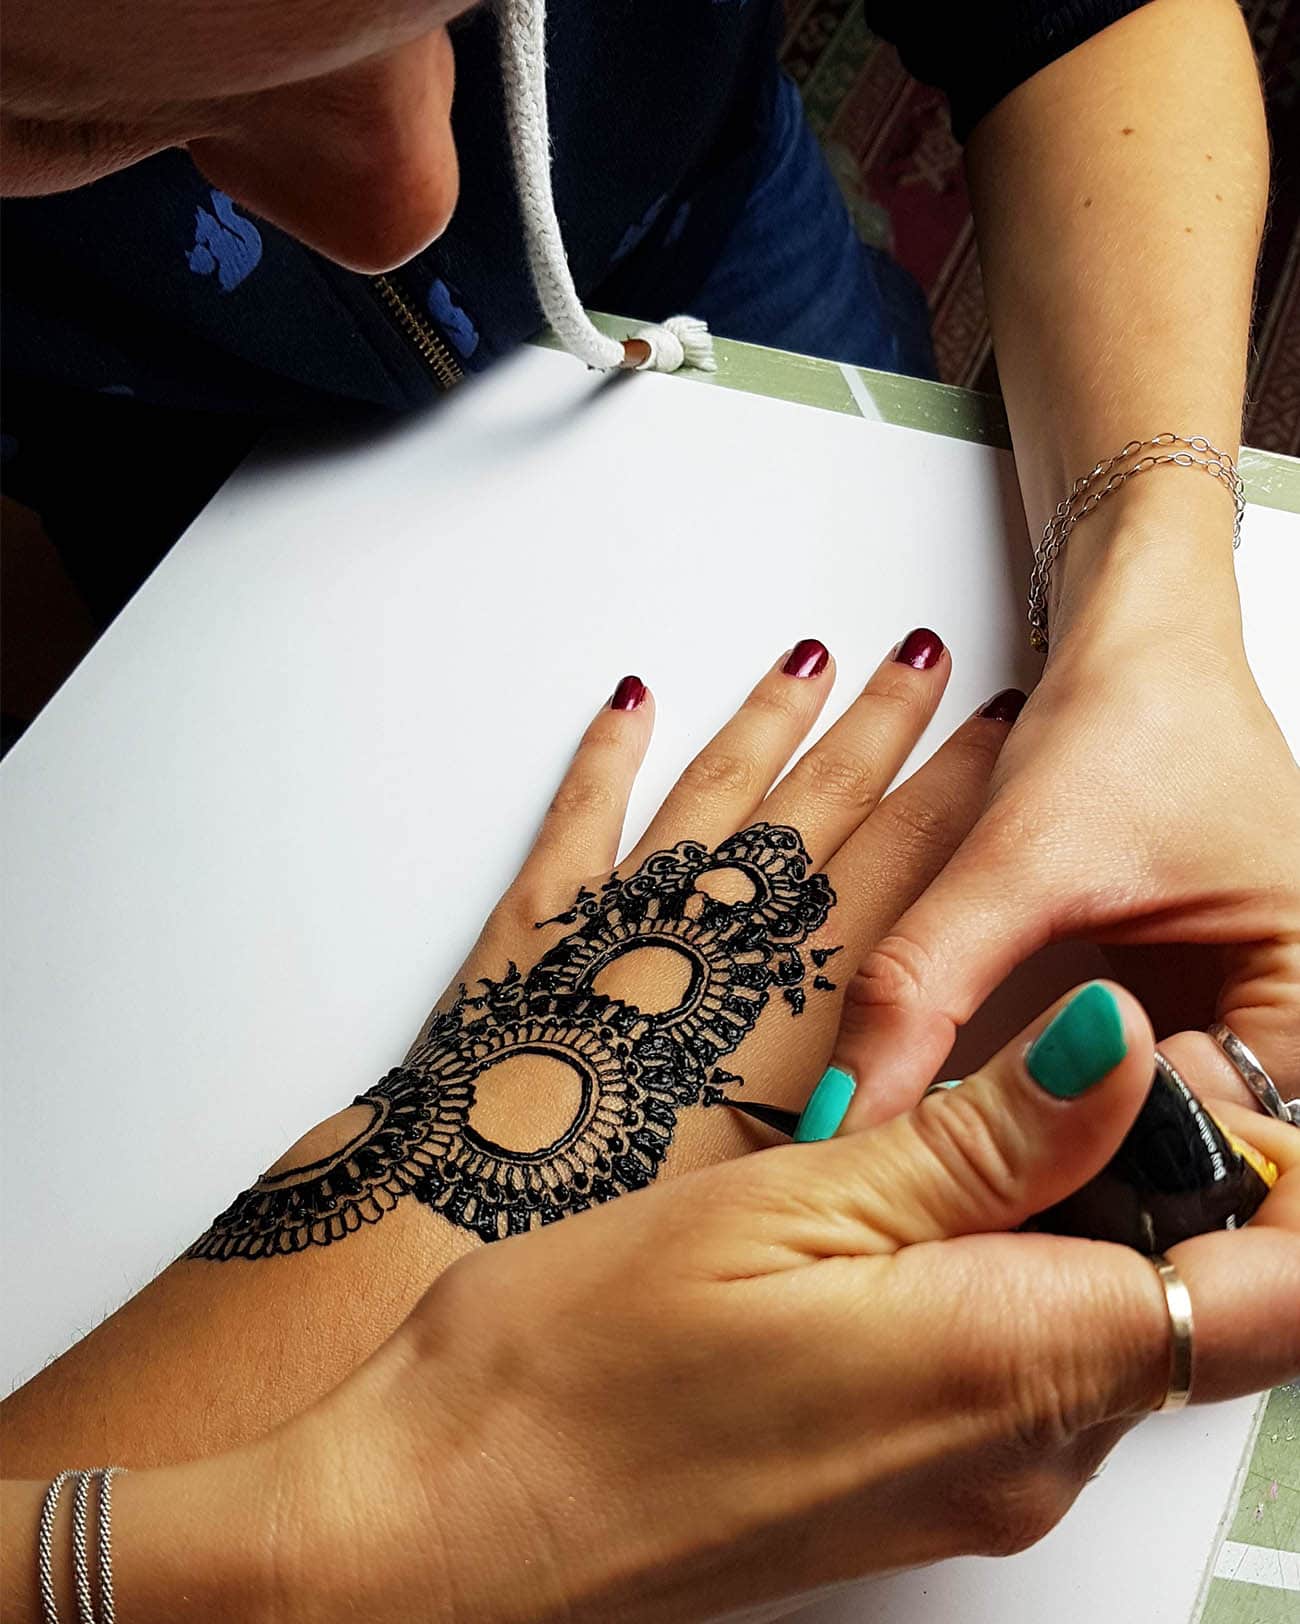 Anleitung - Henna Tattoo selber machen